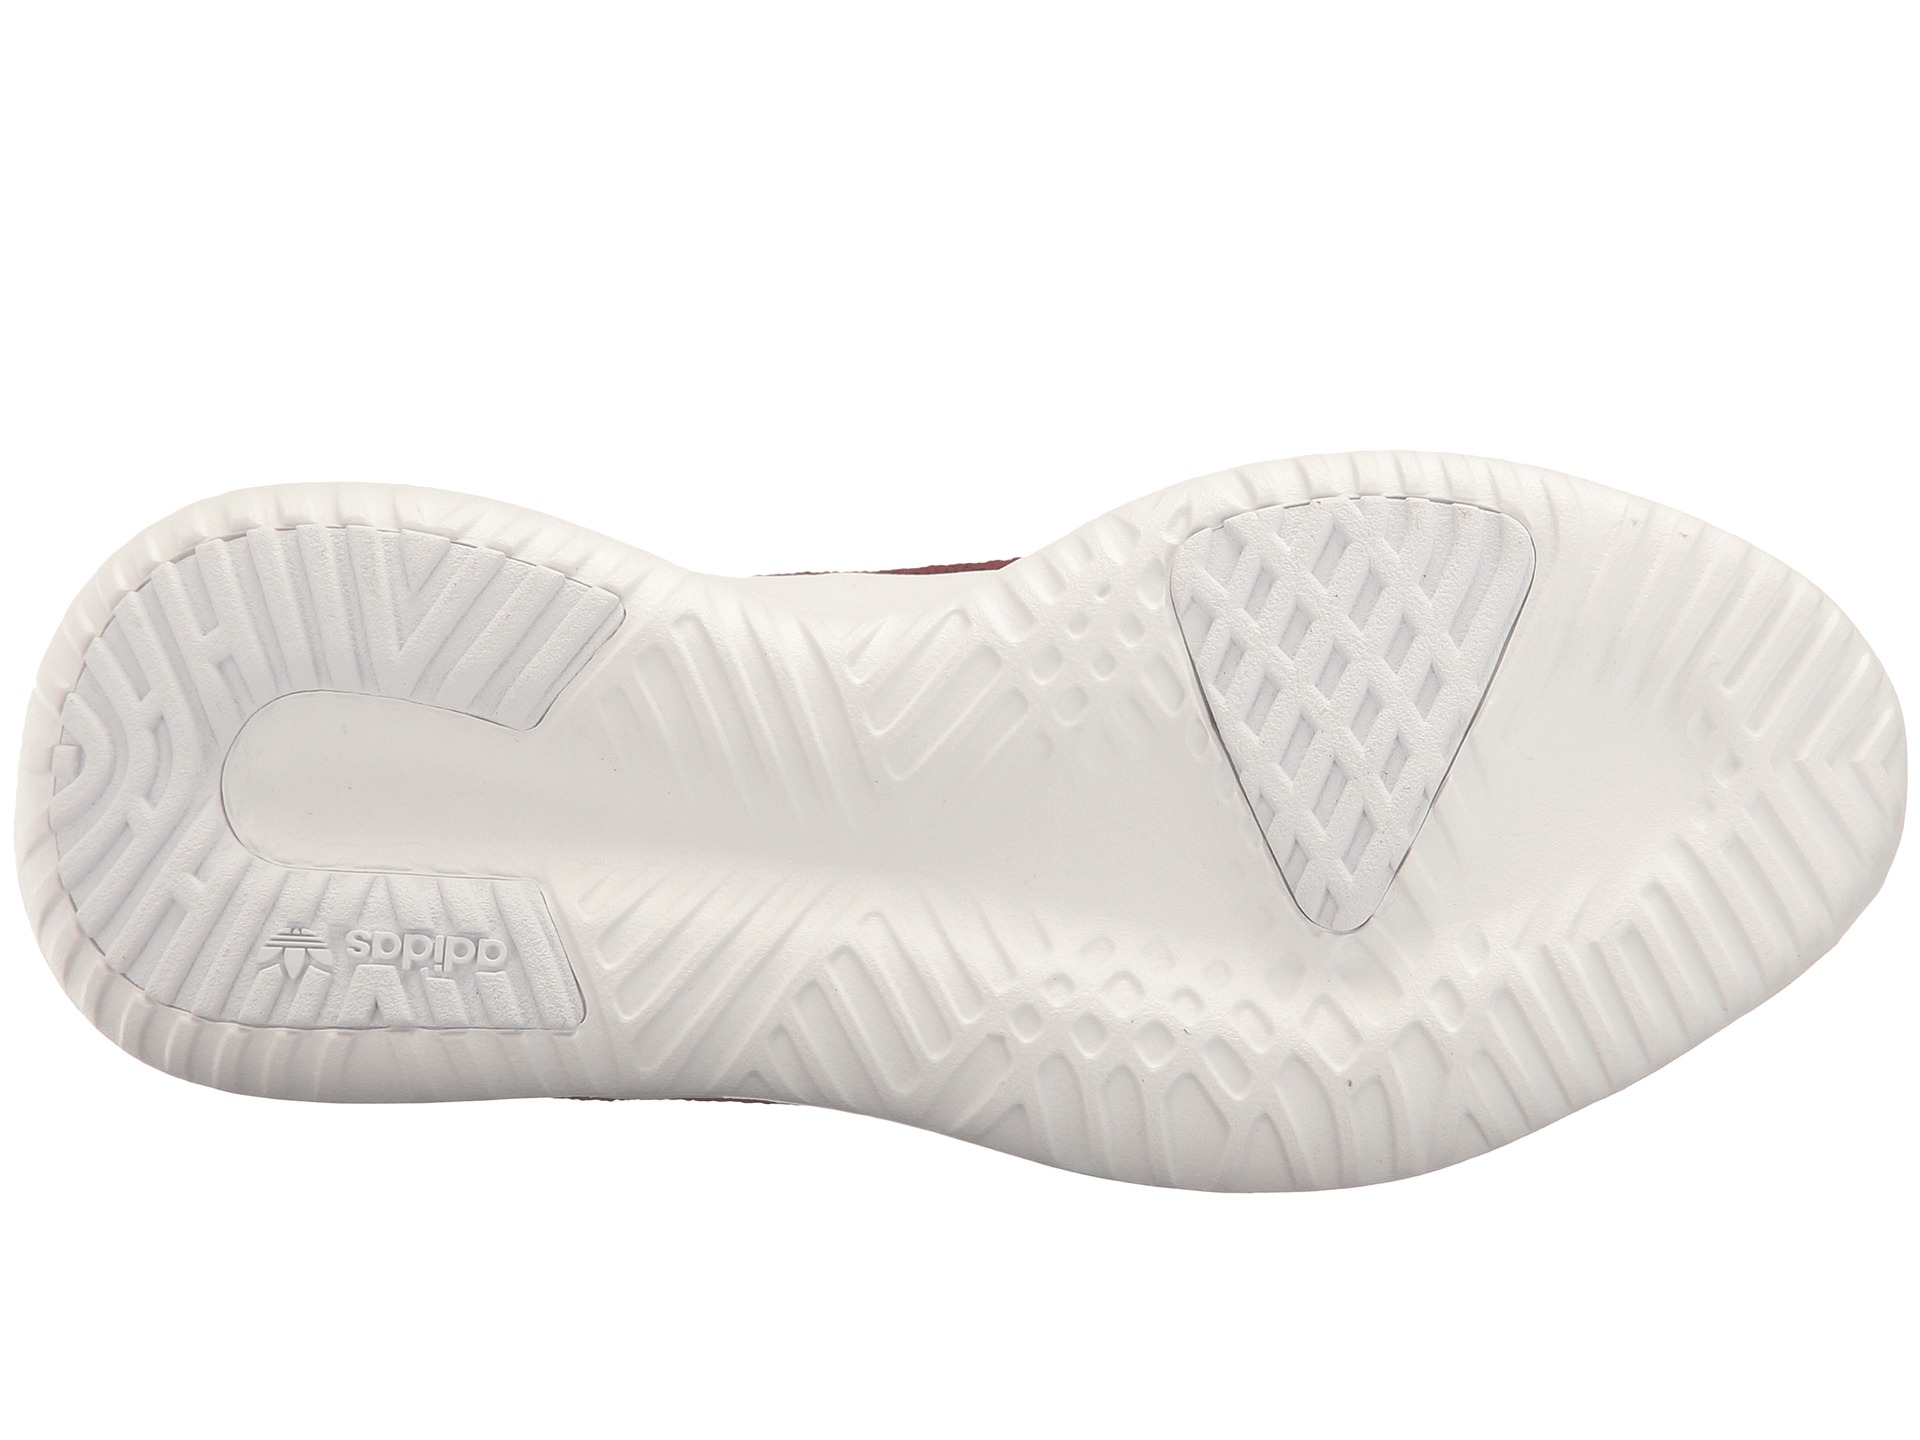 Adidas originals tubular runner shoes light solid grayvintage white